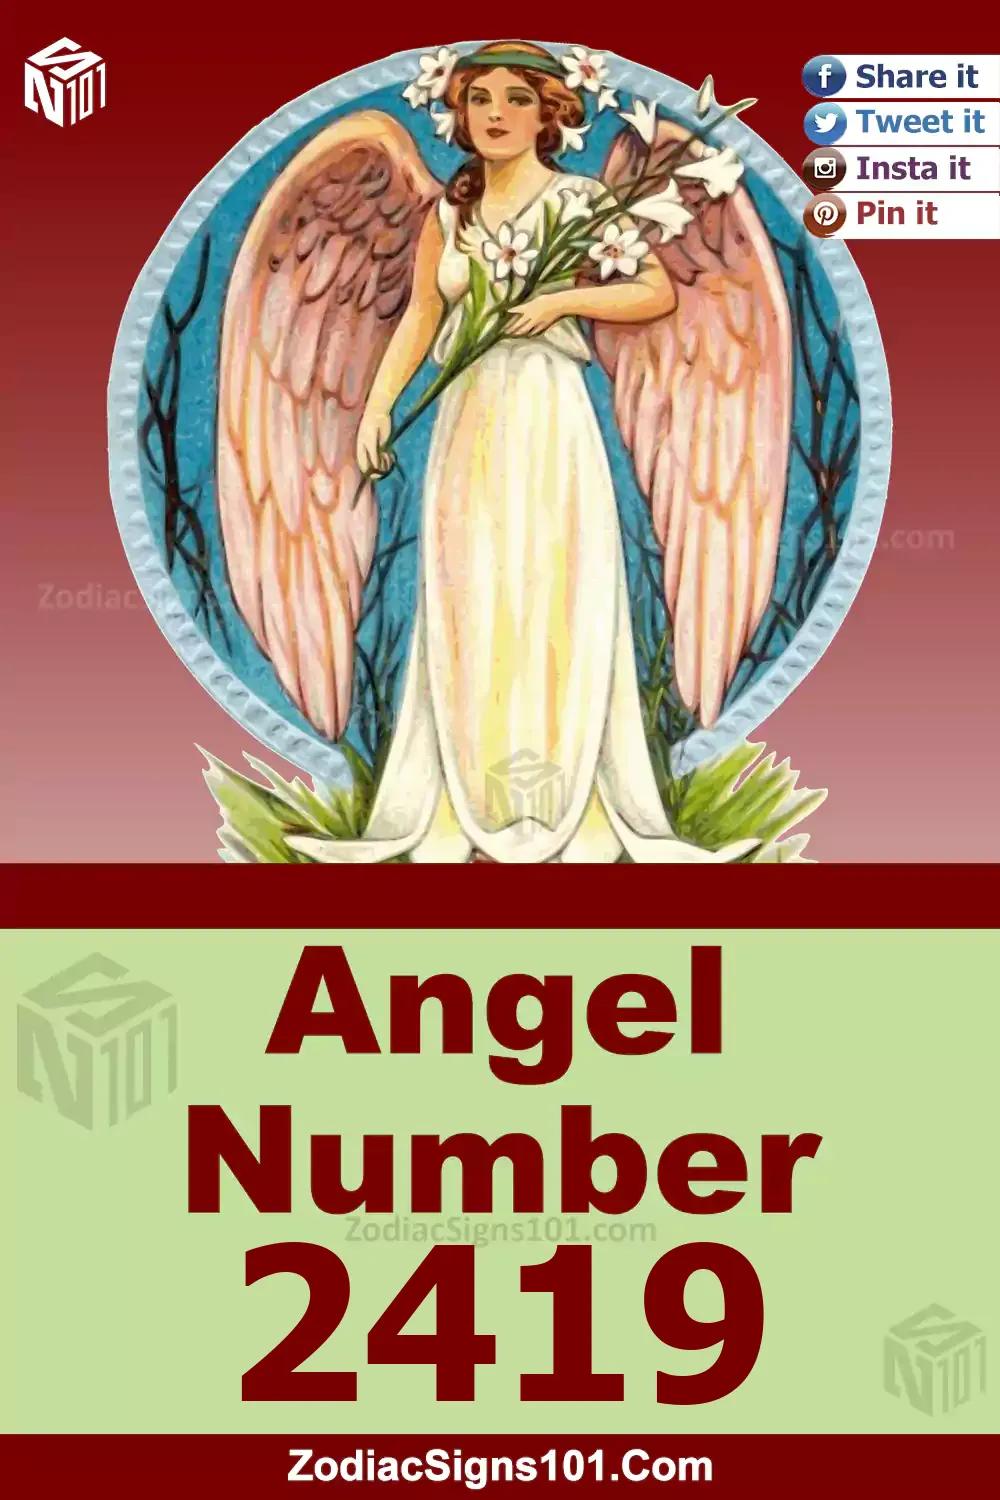 2419-Angel-Number-Meaning.jpg